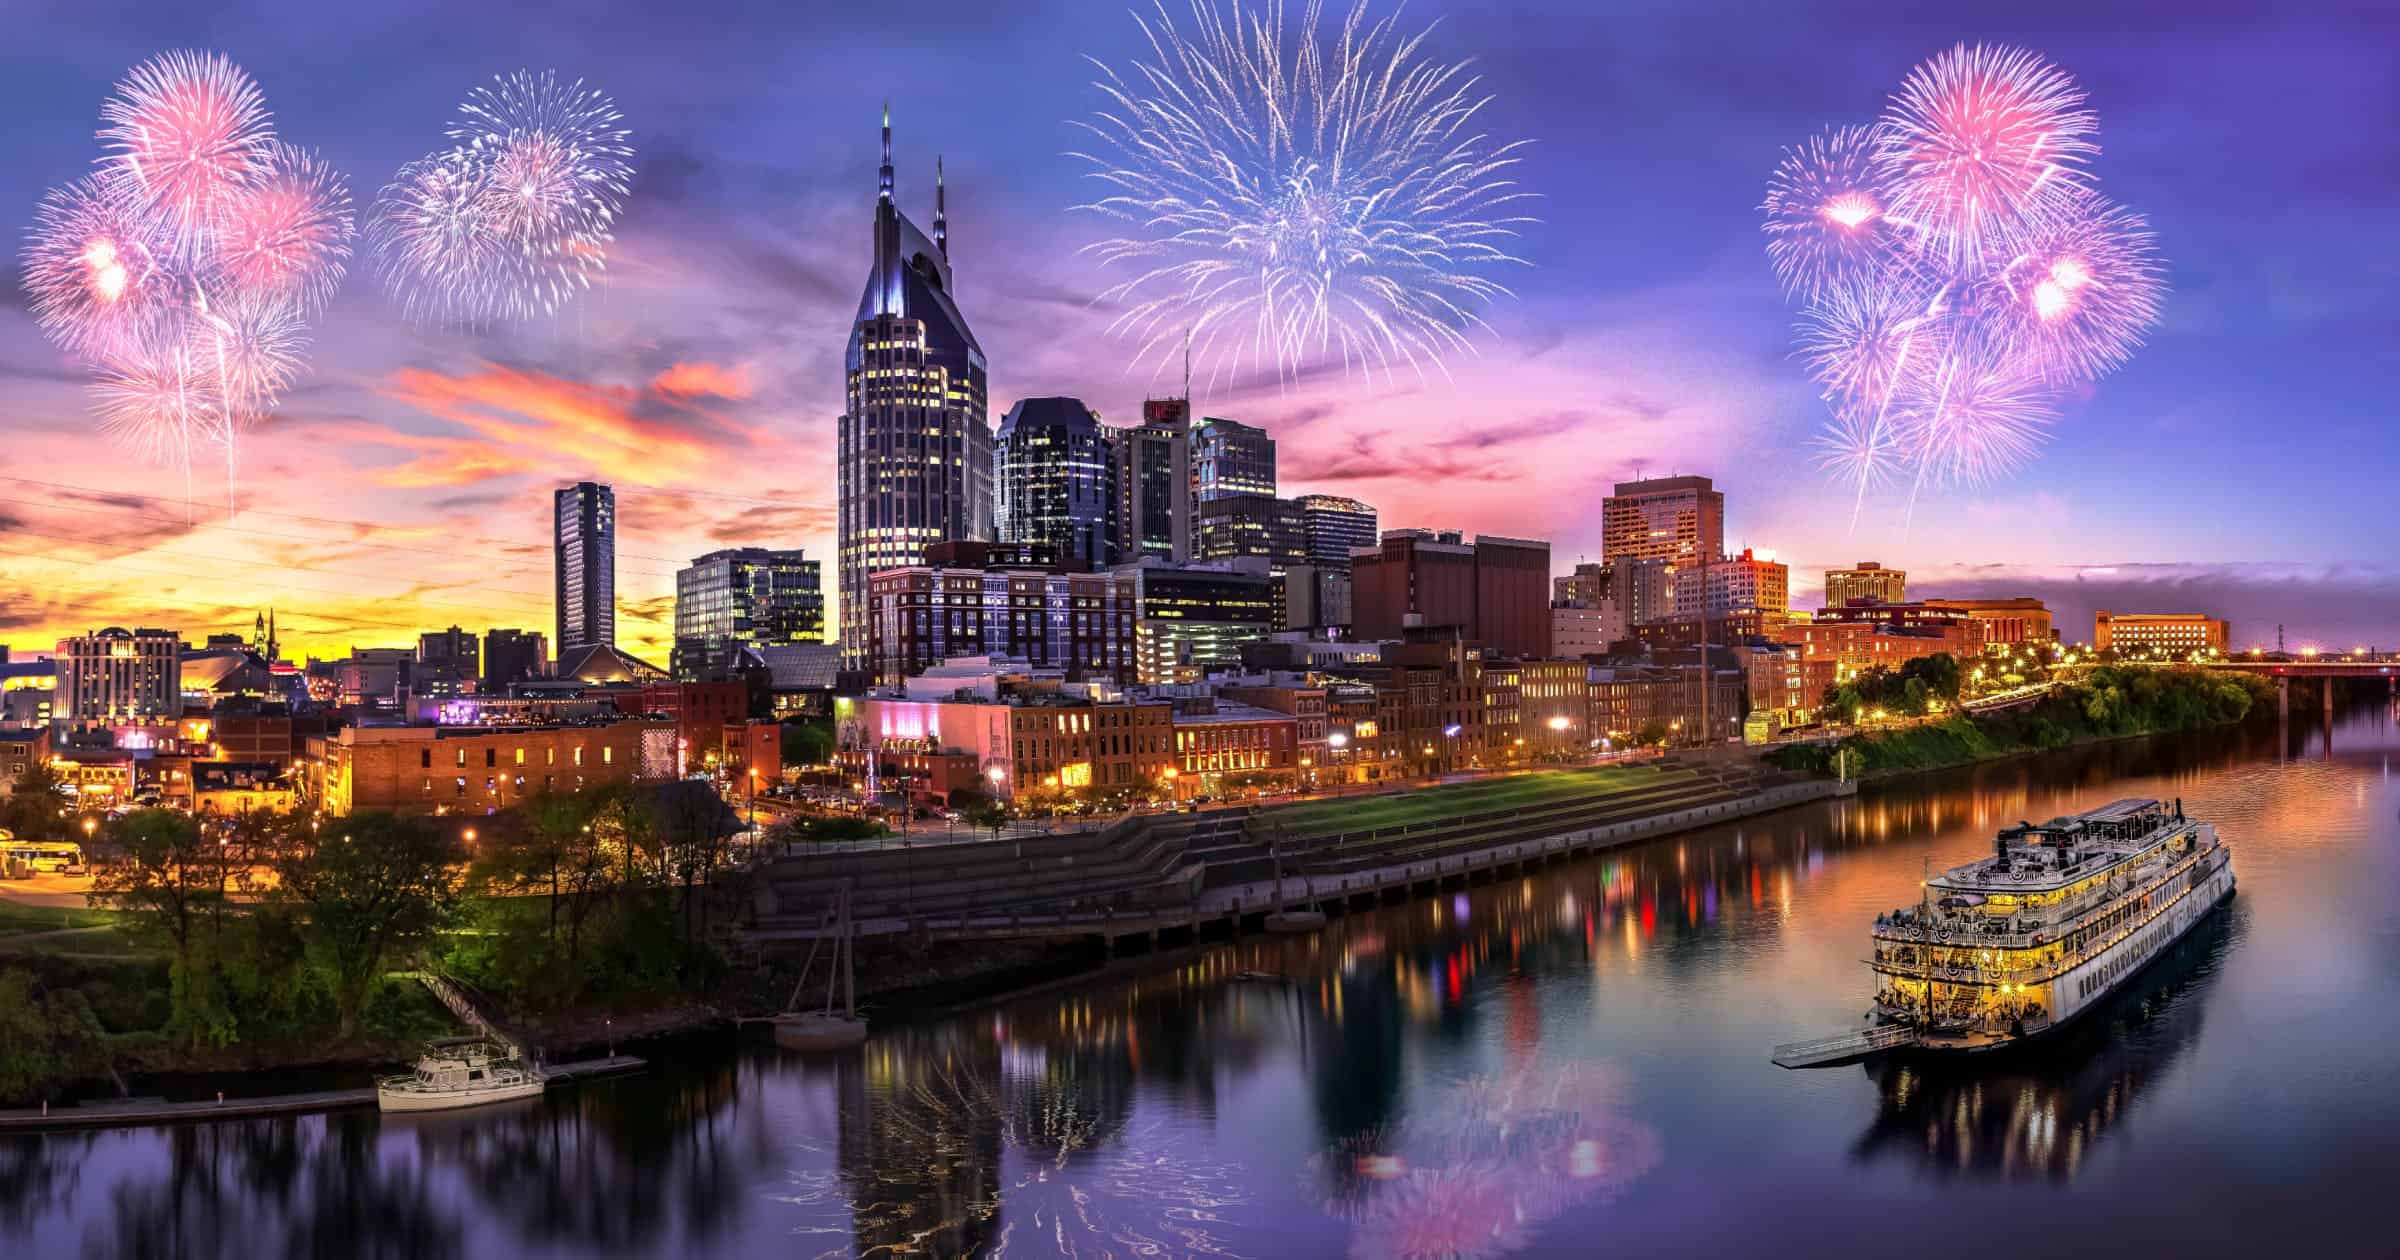 Fireworks over the city of Nashville